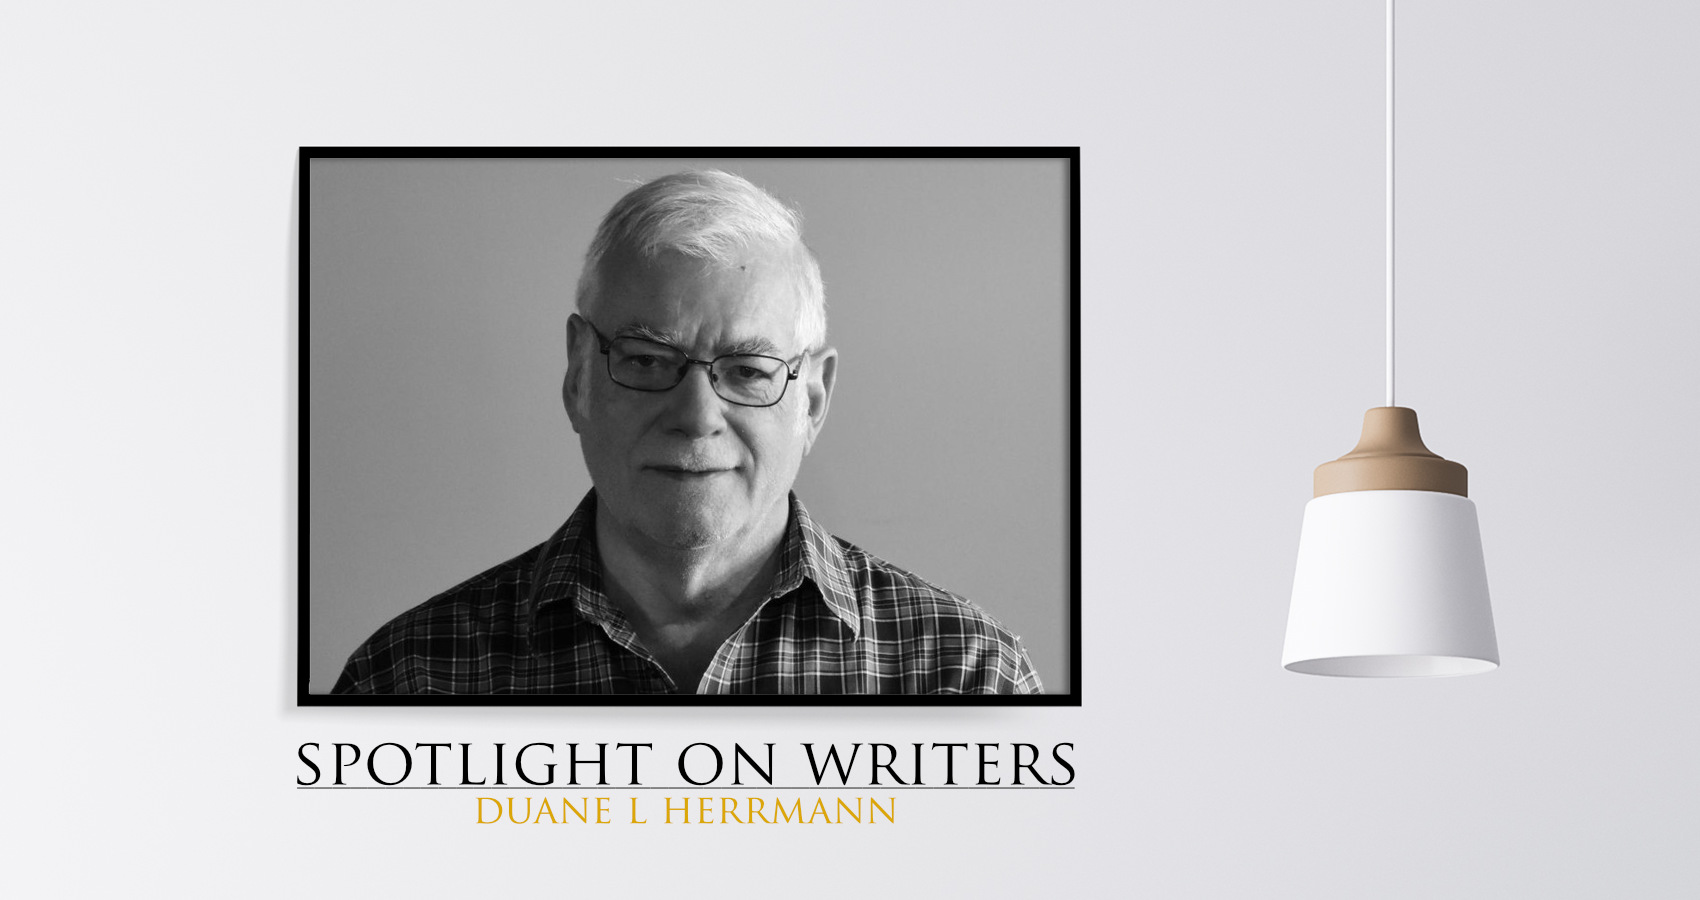 Spotlight On Writers - Duane L Hermann, interview at Spillwords.com